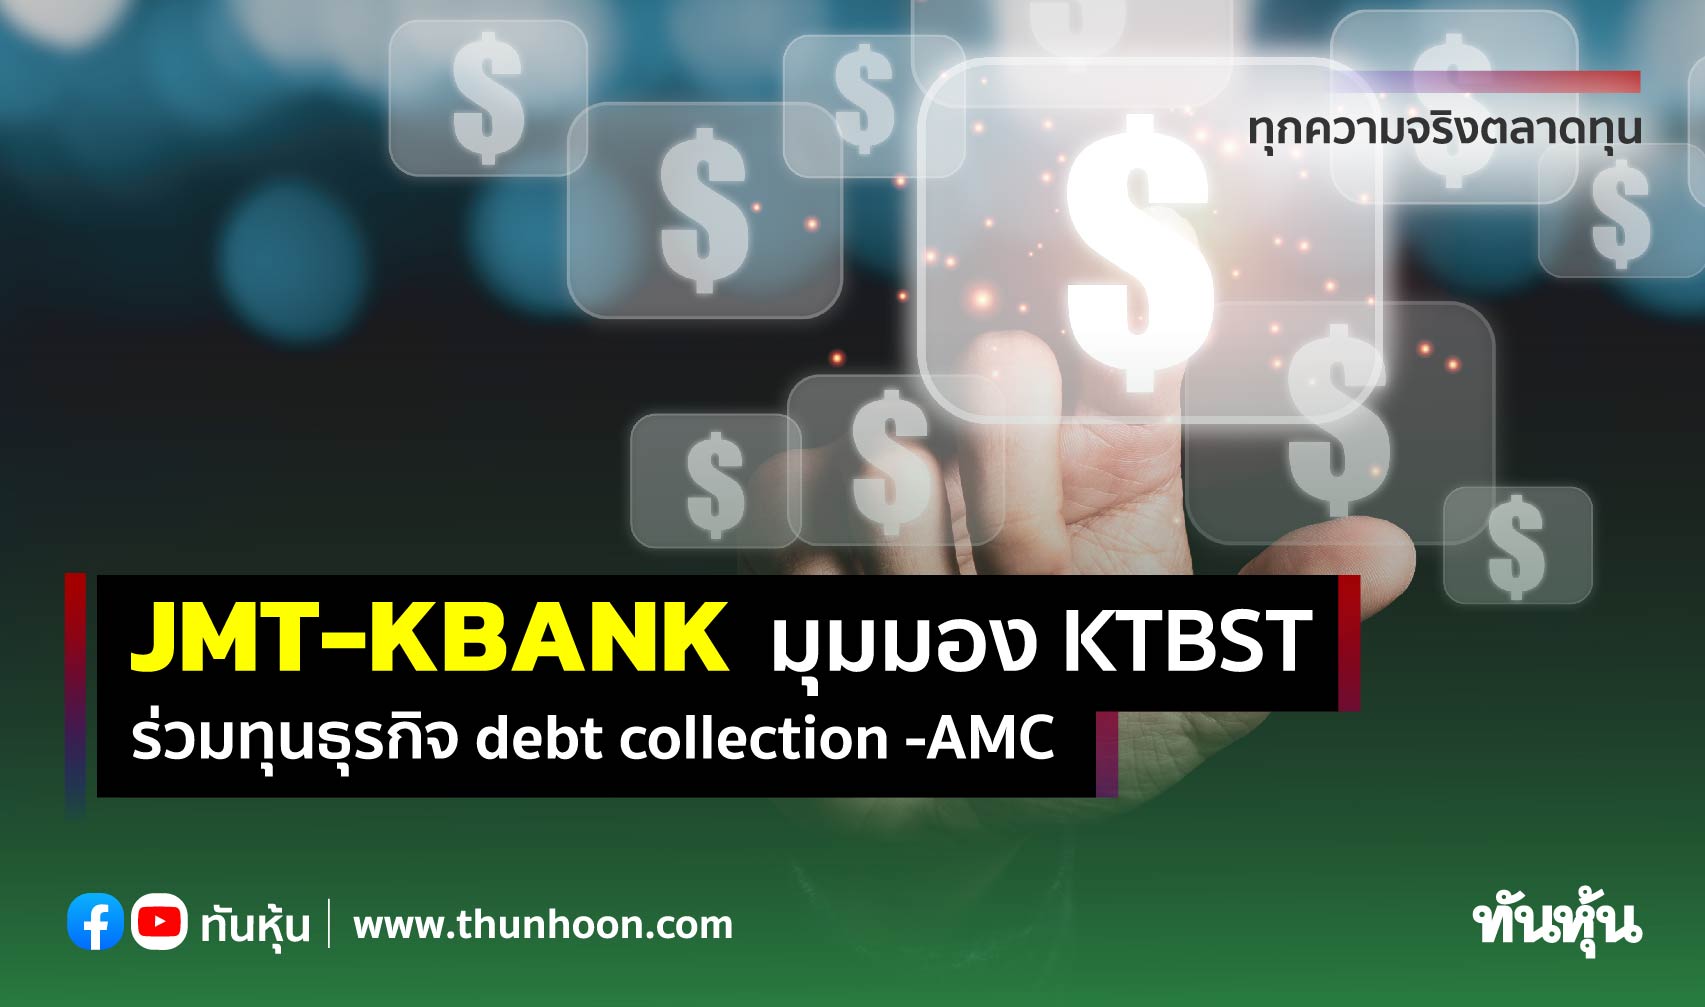 JMT-KBANK มุมมอง KTBST ร่วมทุนธุรกิจ debt collection -AMC